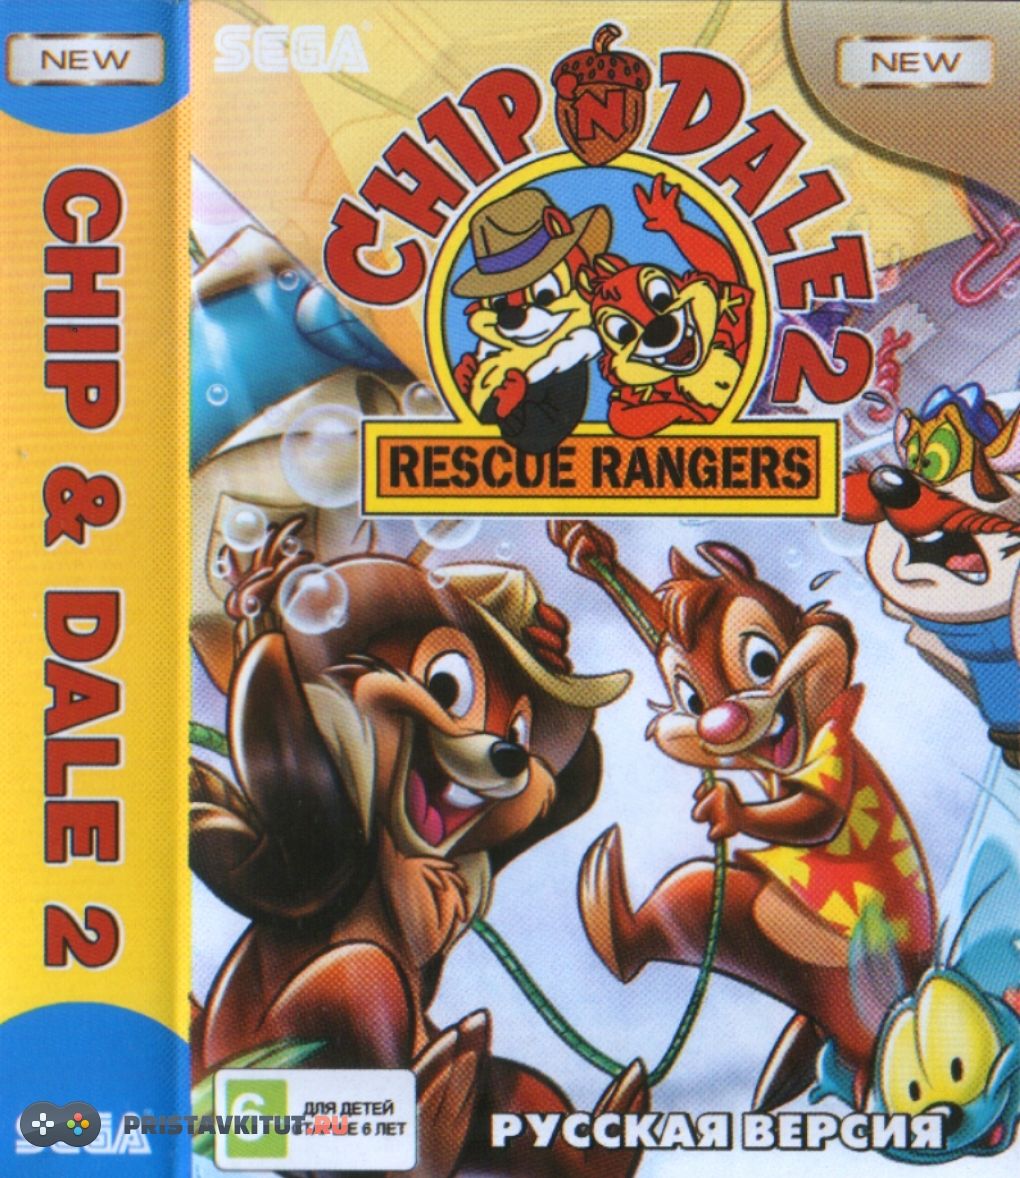 Игра чип и дейл на сеге. Чип и Дейл игра. Чип и Дейл картридж сега. Чип и Дейл сега игра. Chip ’n Dale Rescue Rangers 2.